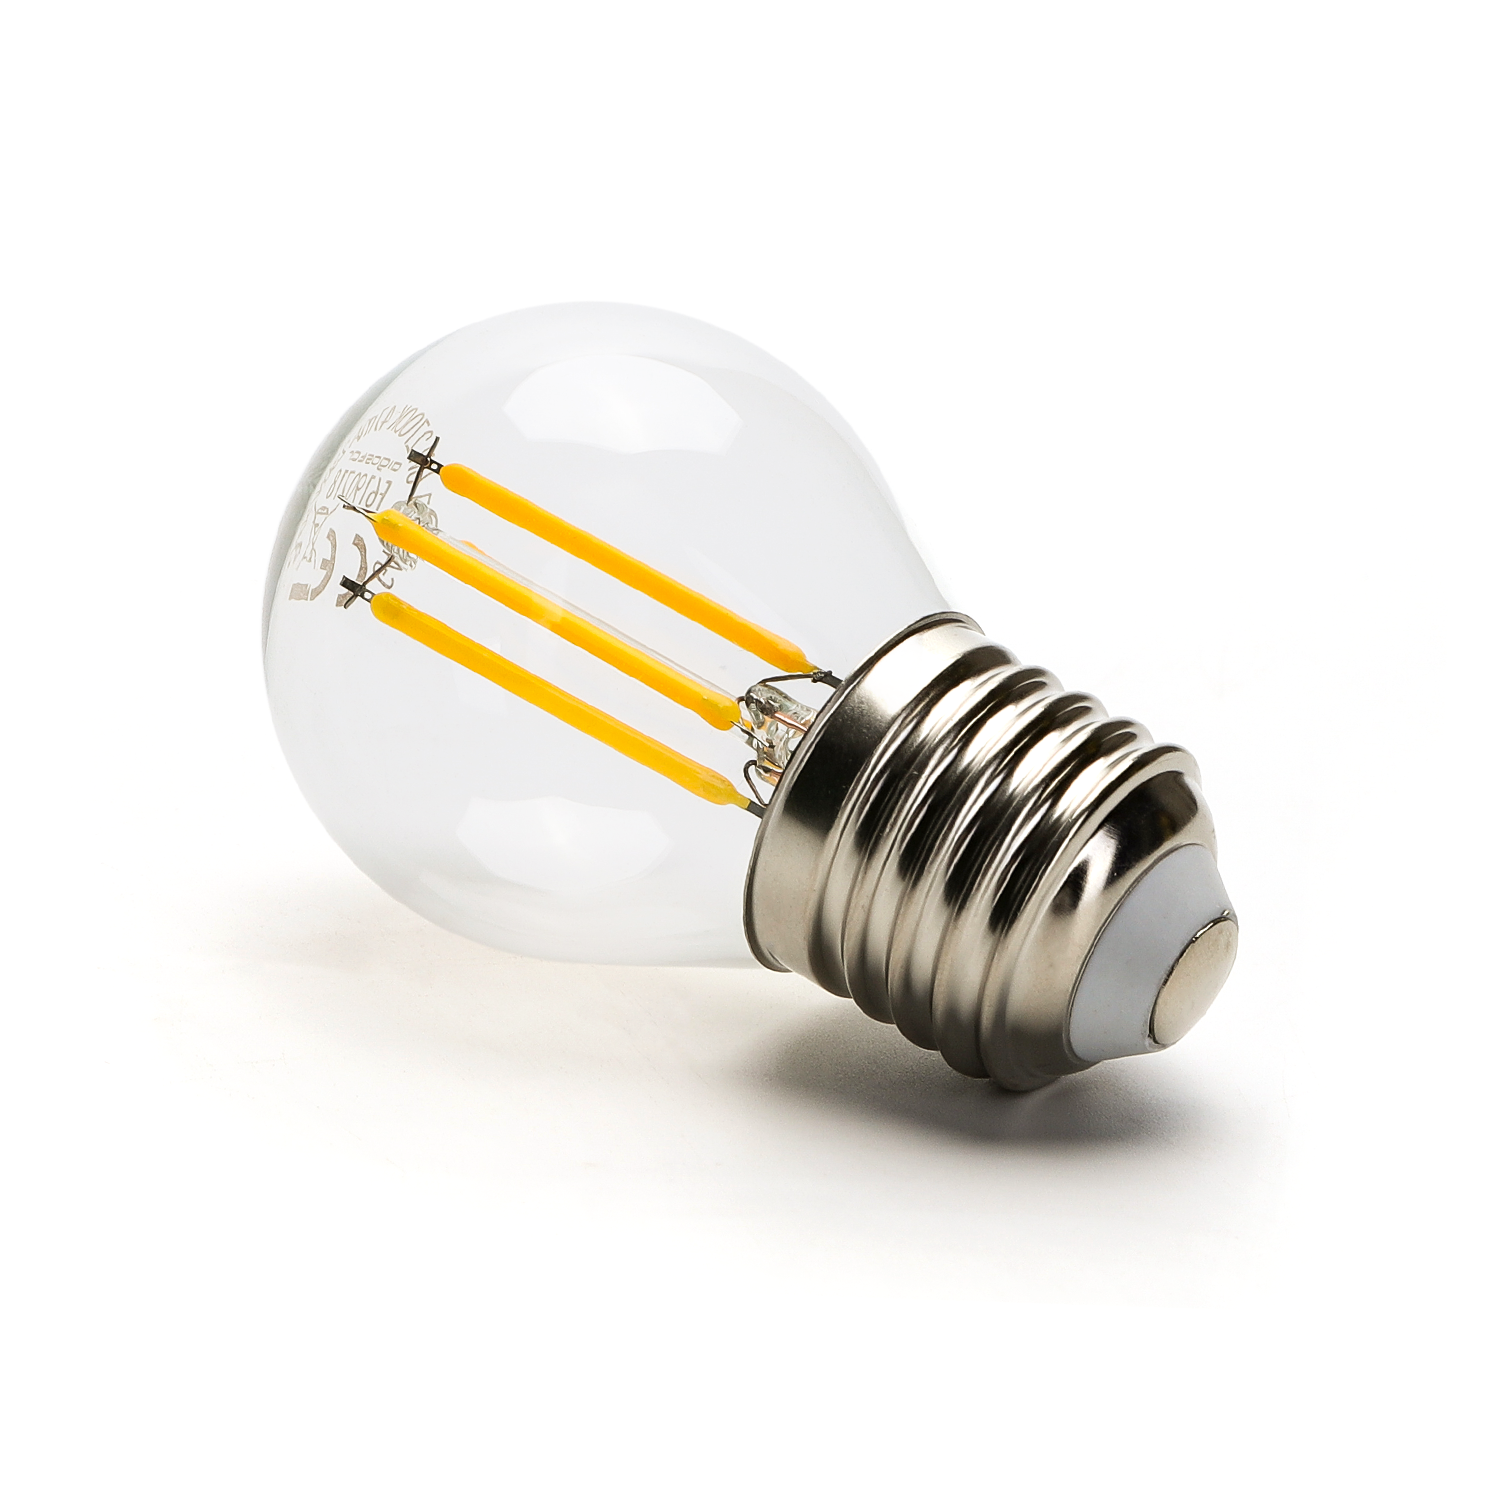 LED Glühbirne - 4W LED Filament Lampe, 2700K warmweiß, E27, Retro